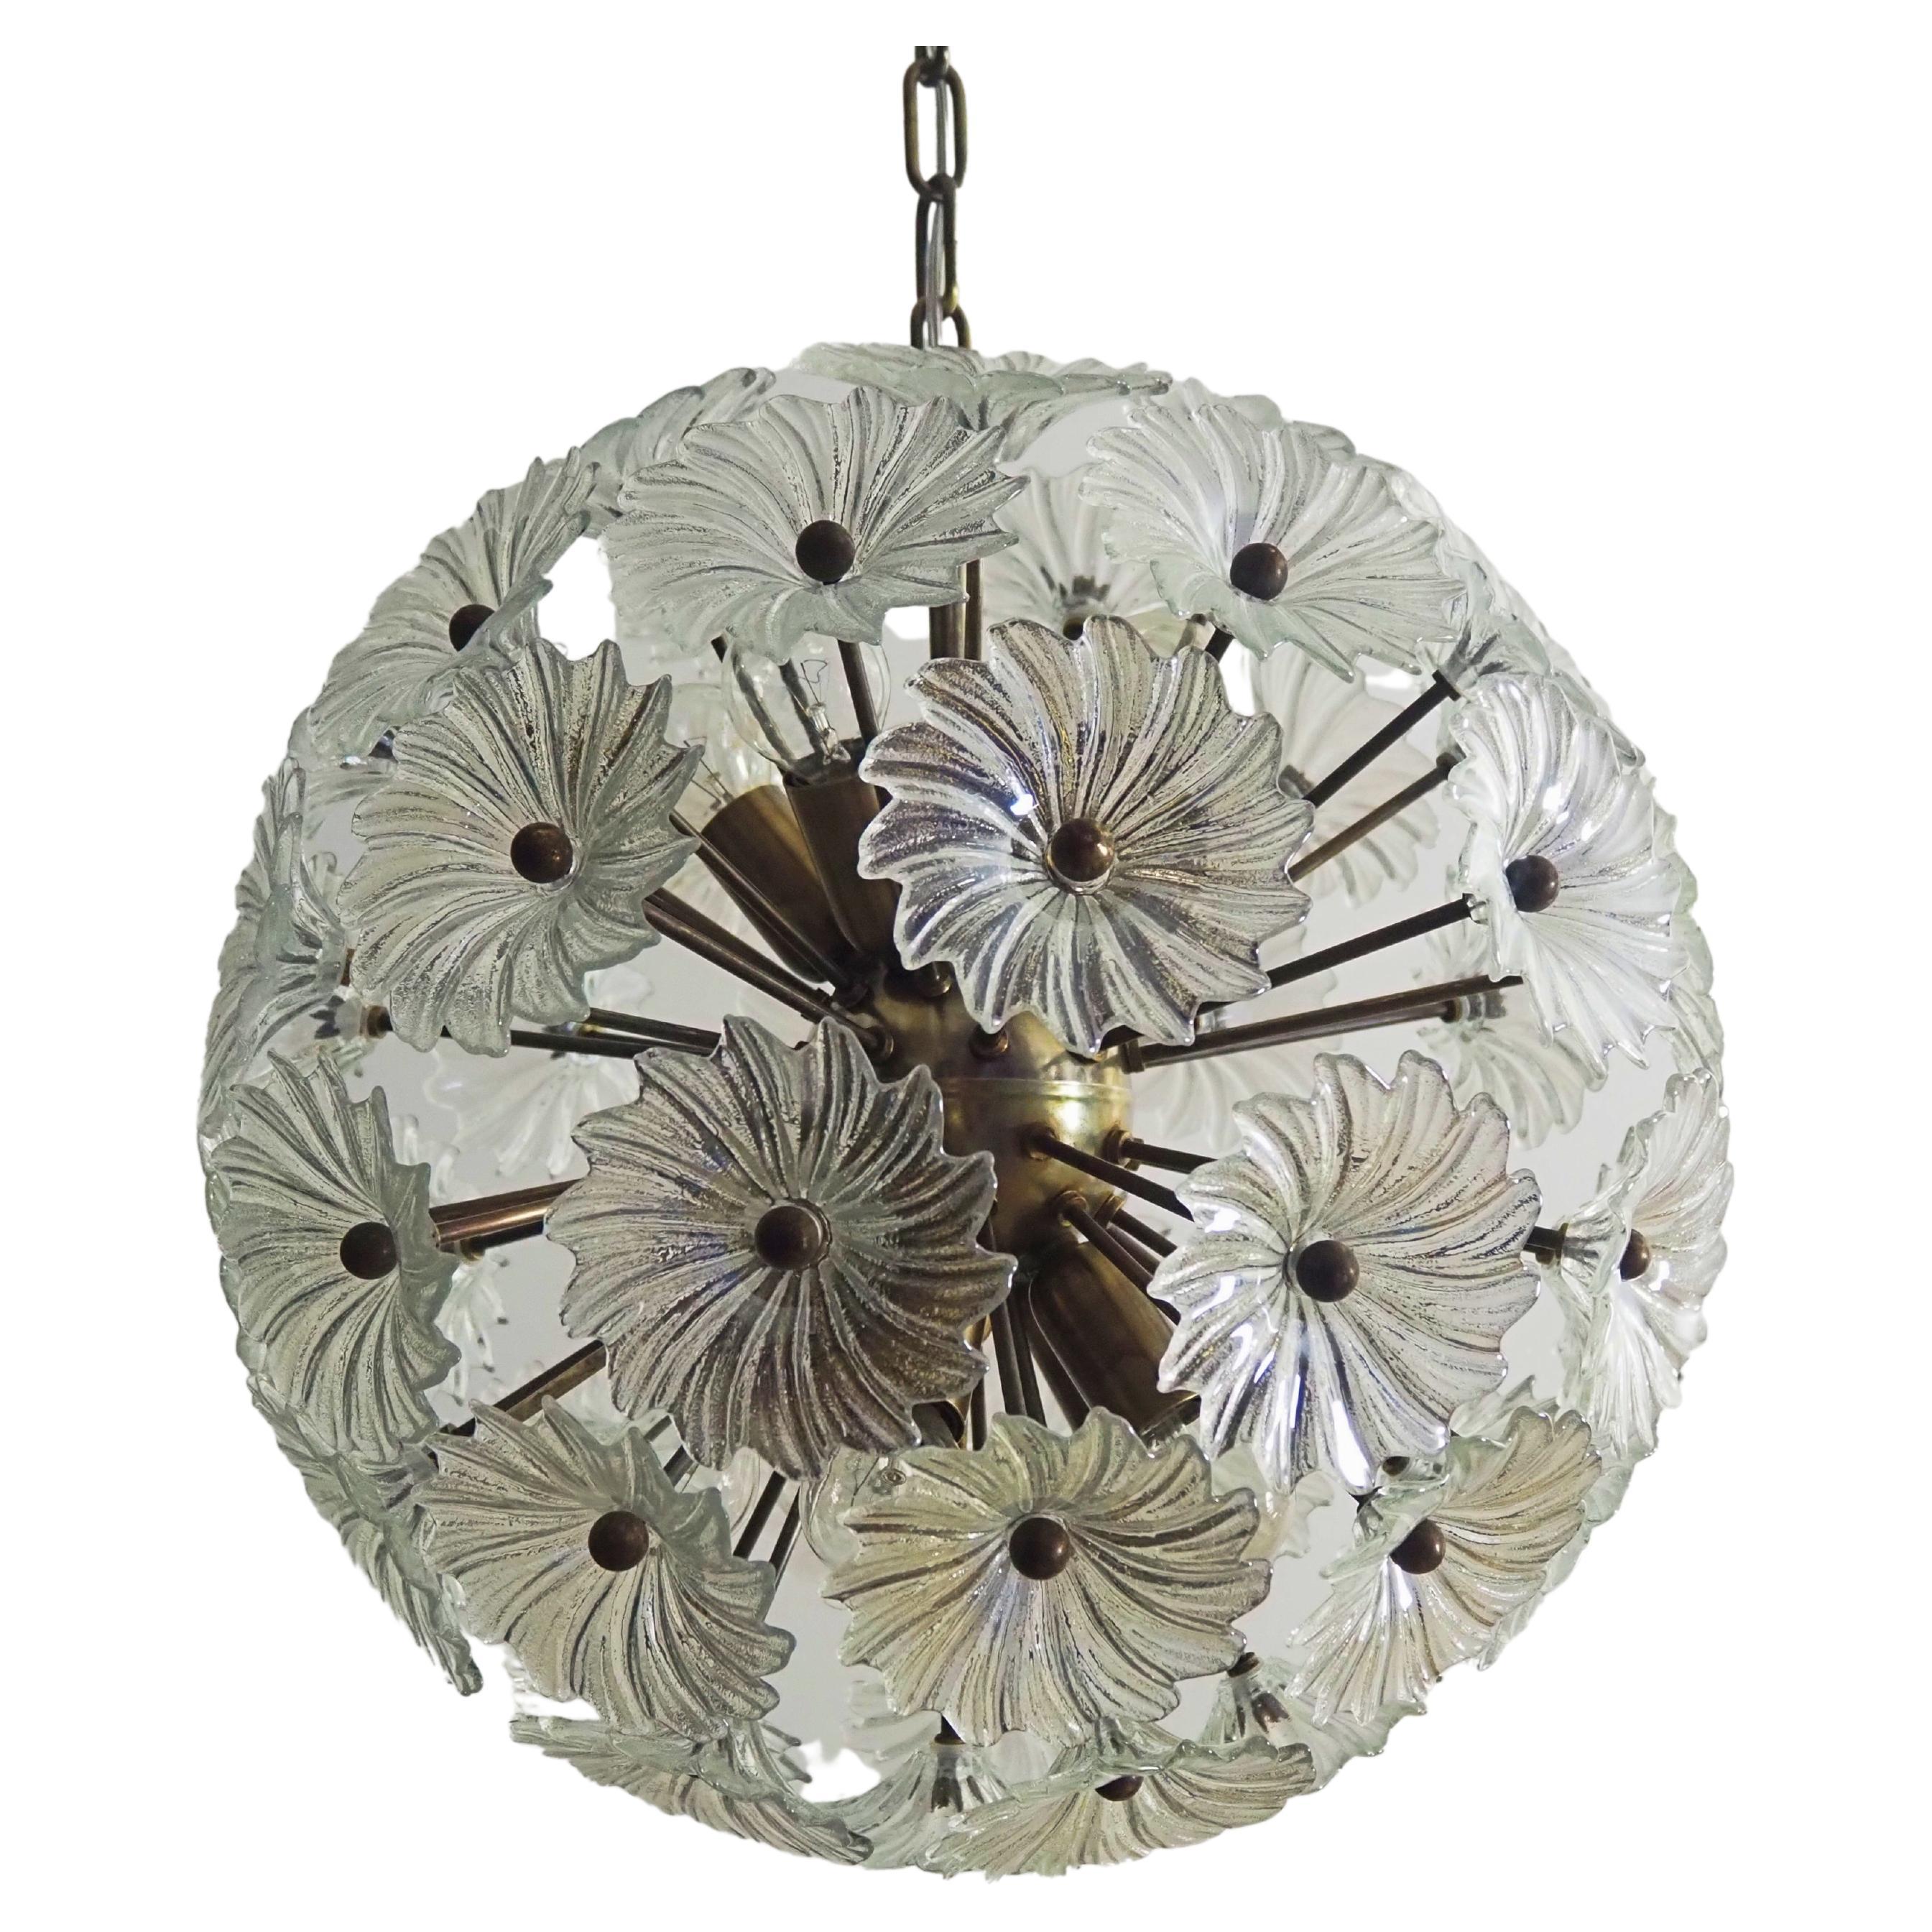 Vintage Sputnik Italian crystal chandelier - 51 Daisy clear glasses